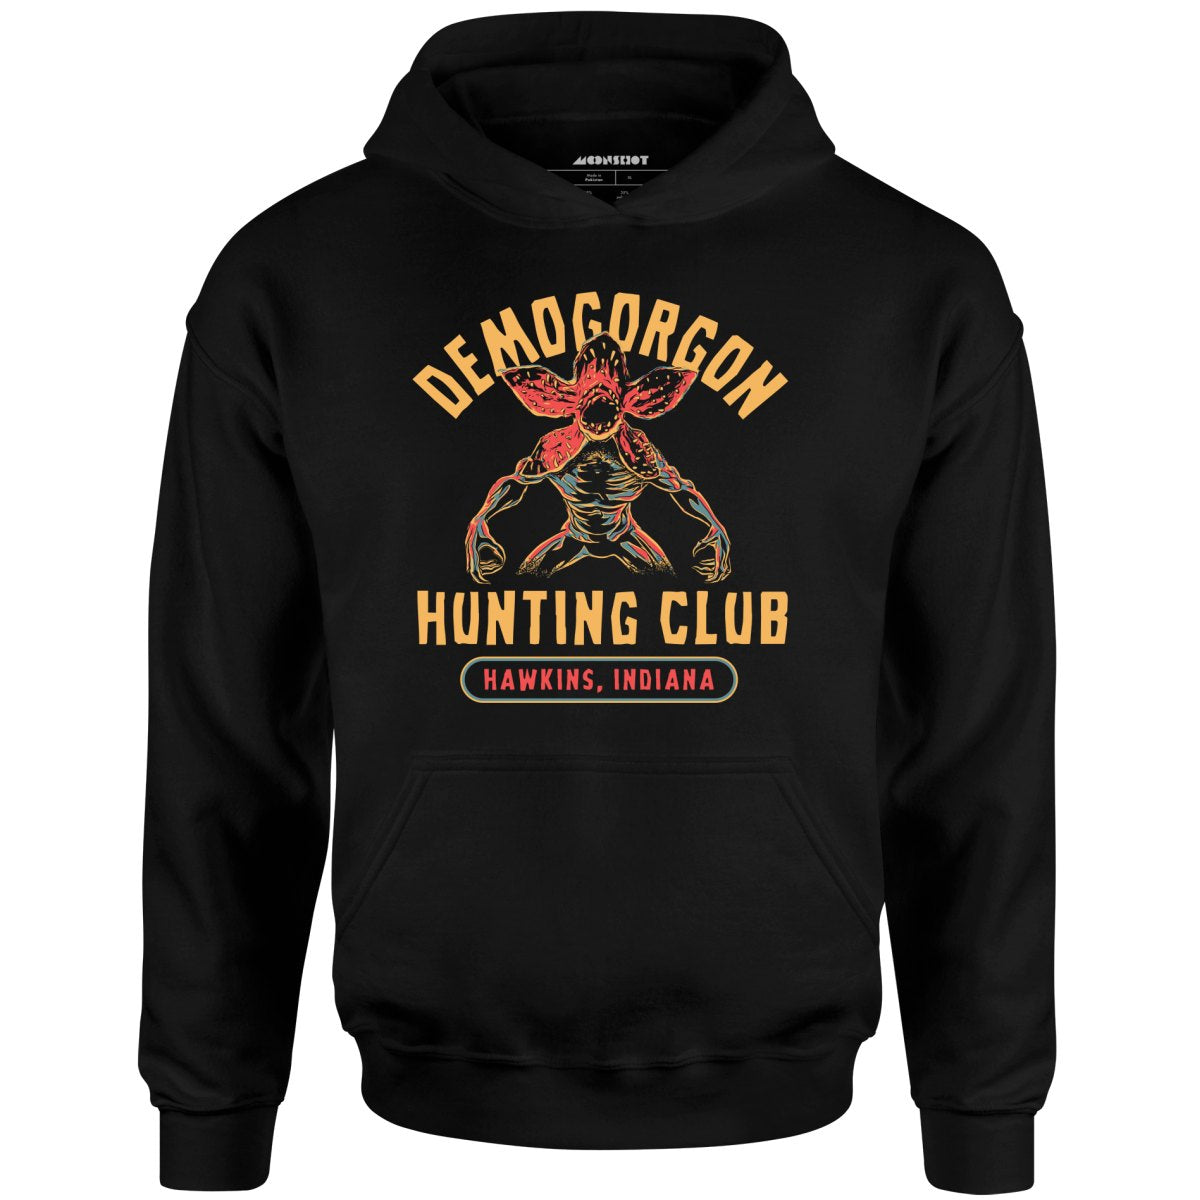 Demogorgon Hunting Club - Unisex Hoodie